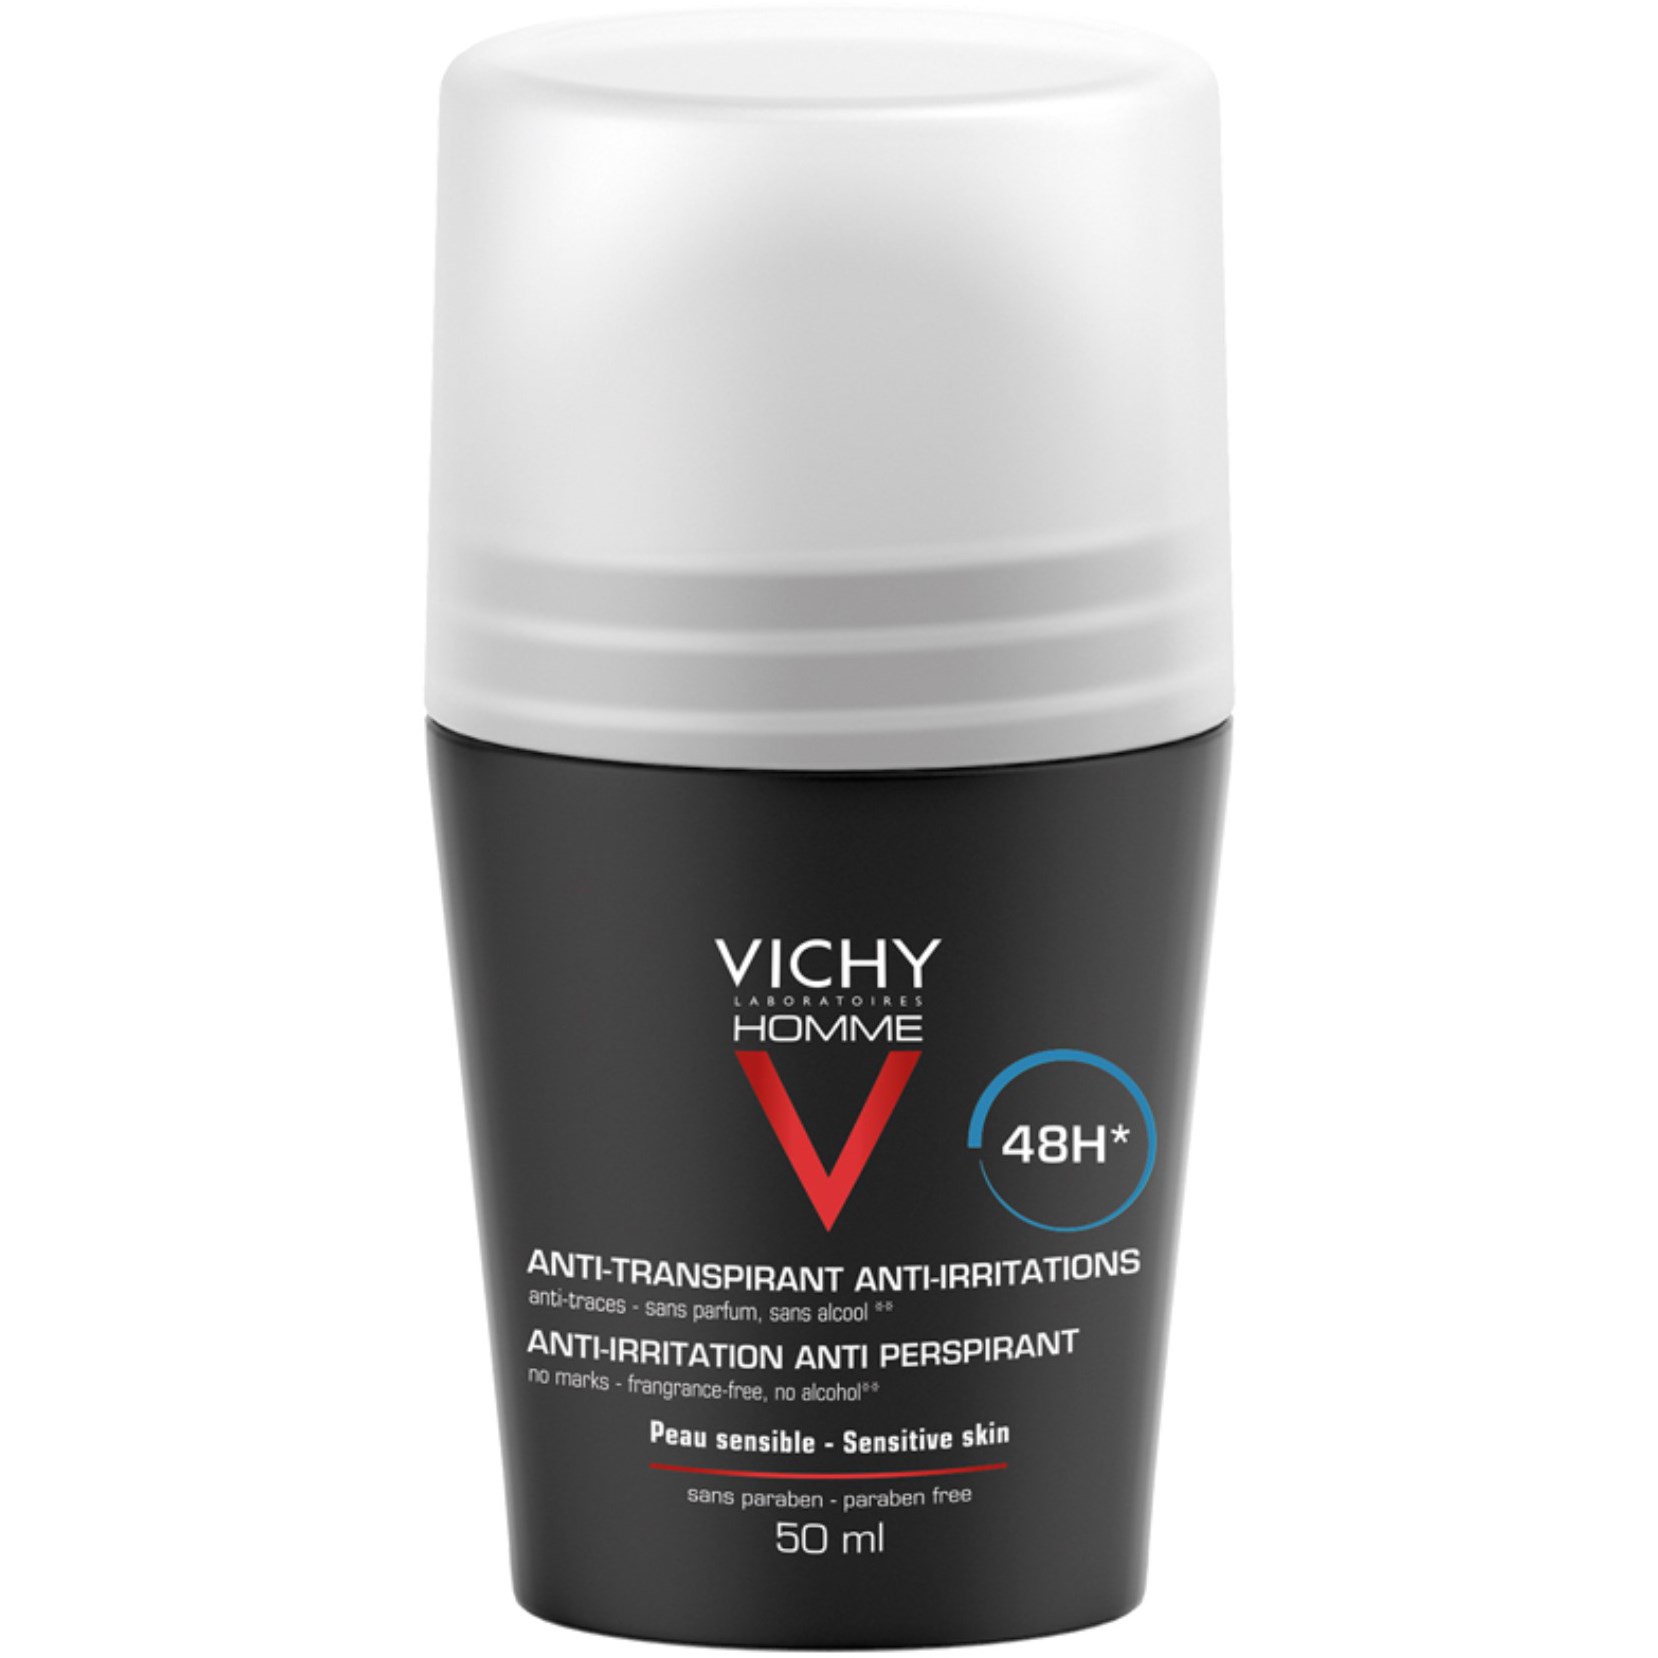 Läs mer om VICHY Homme 48HR Anti-Perspirant Sensitive Skin